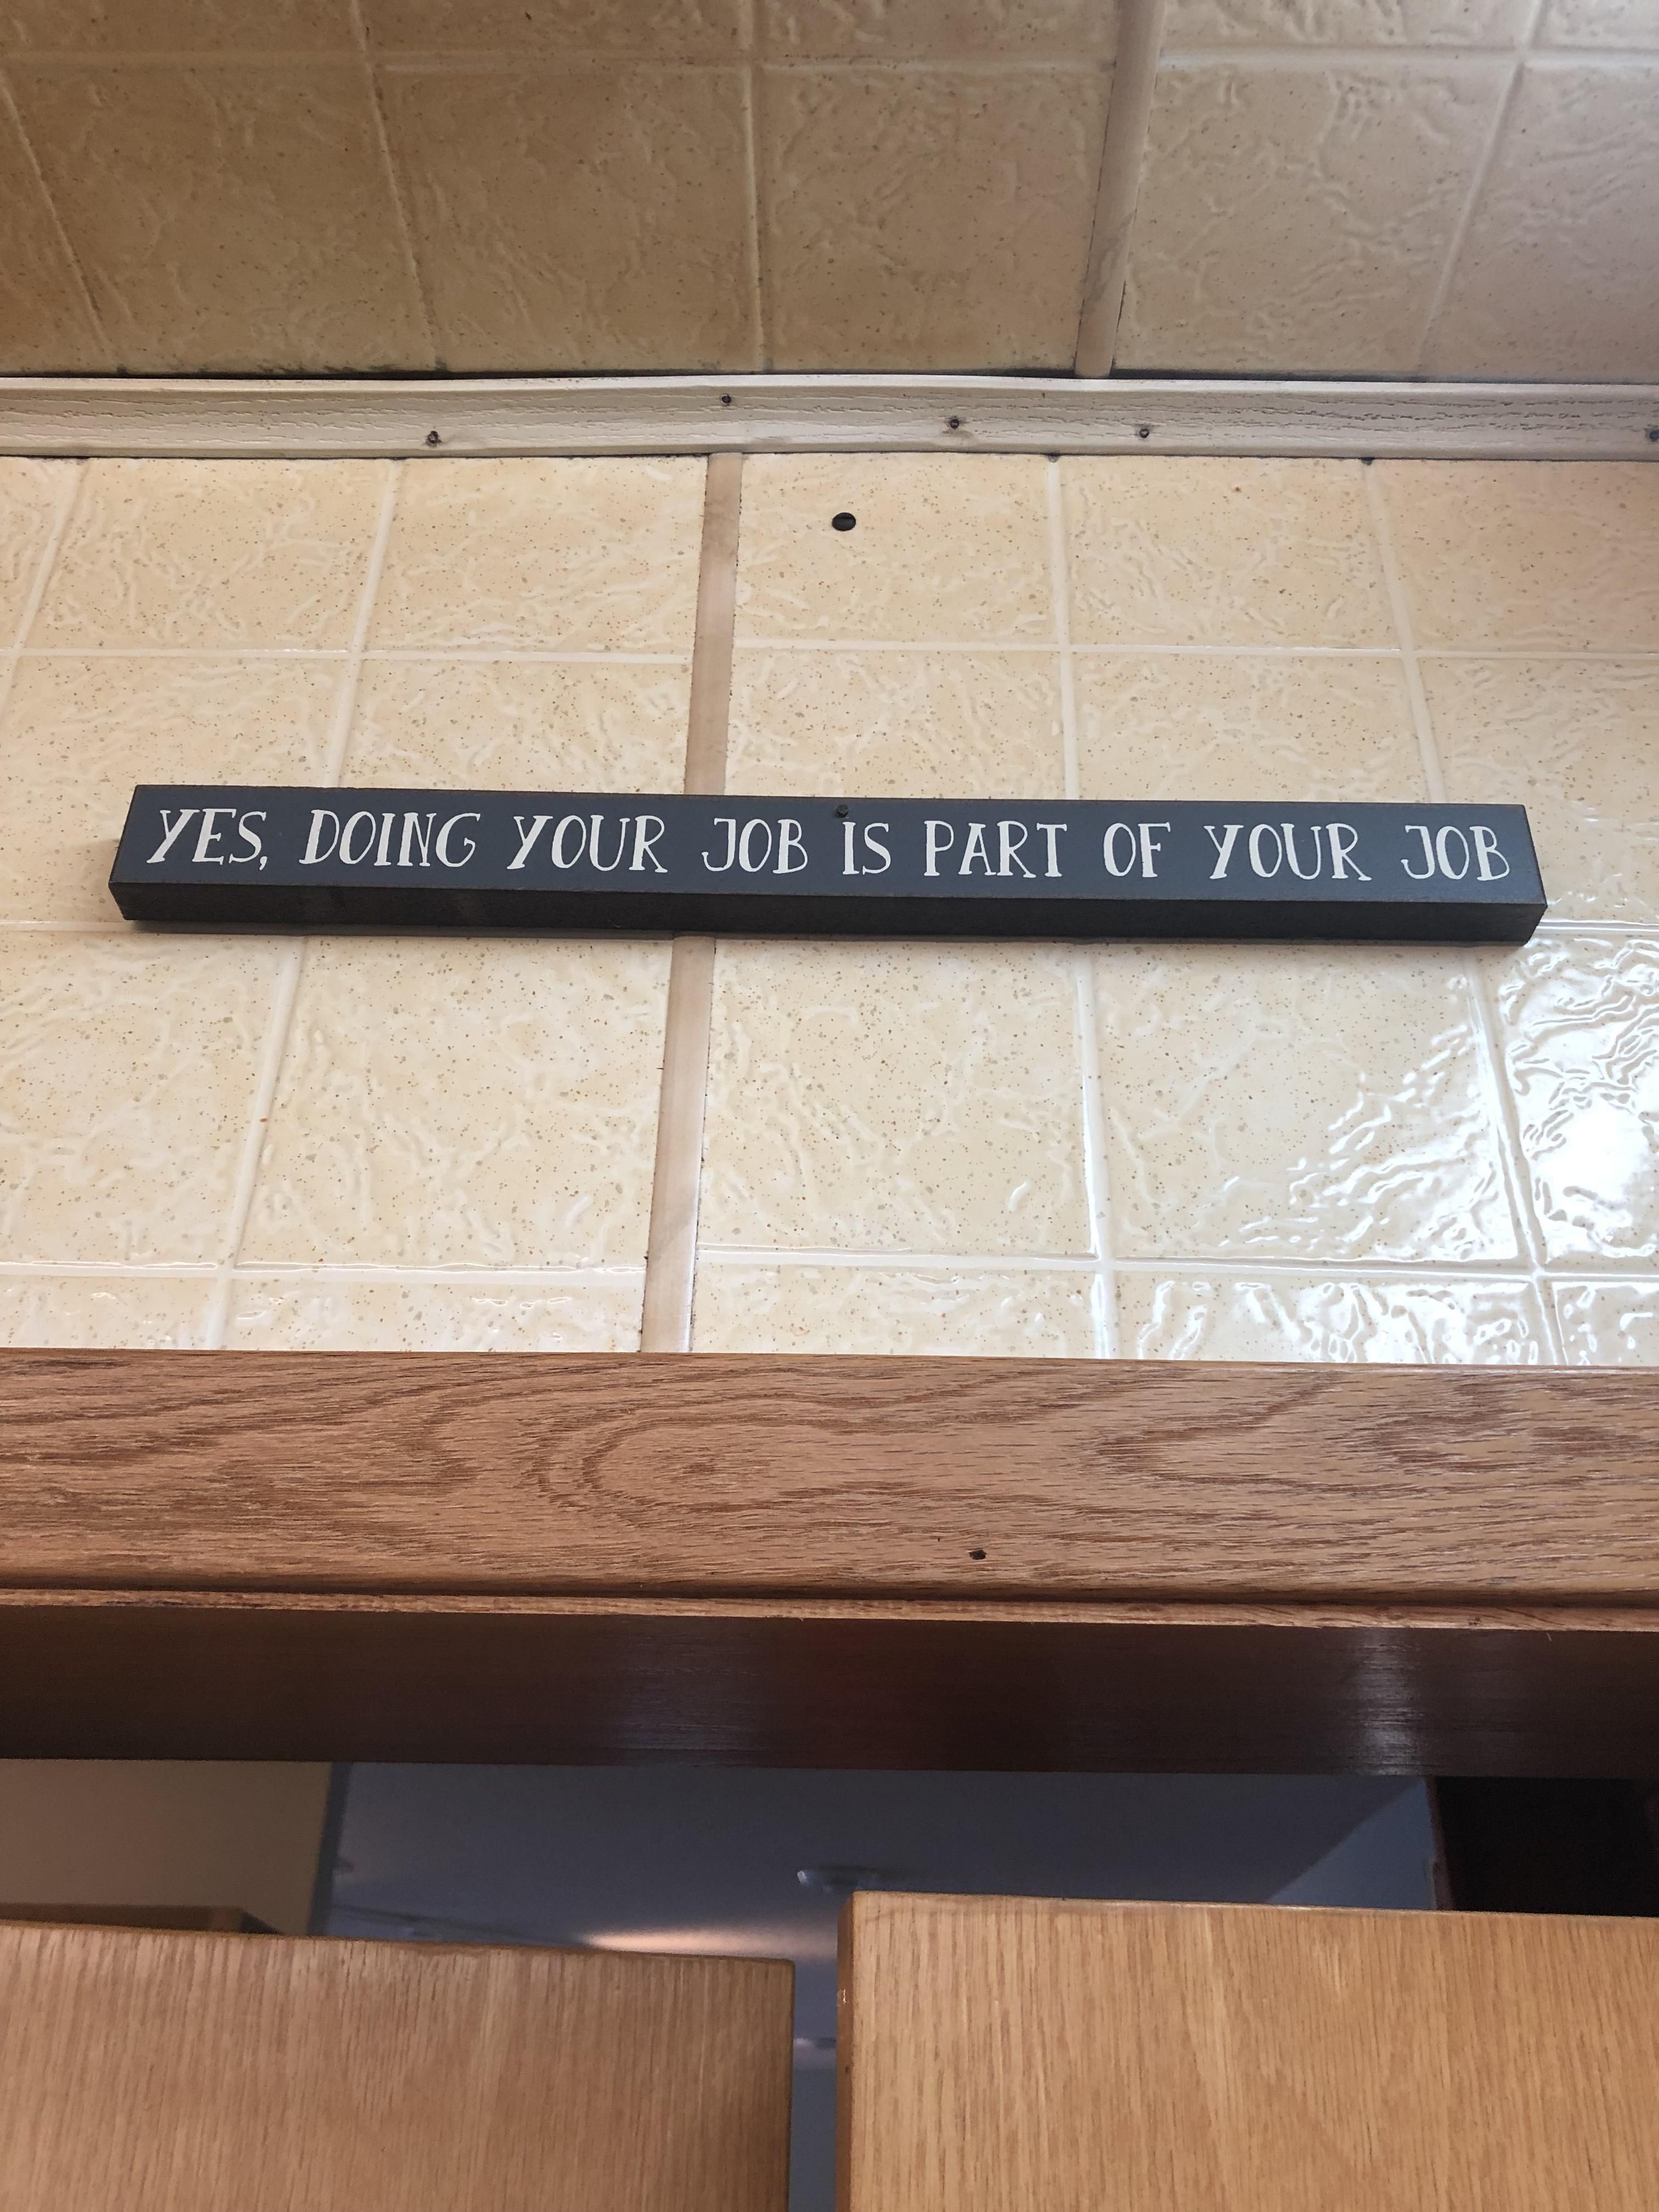 New sign above the kitchen doorway at my restaurant. Ha